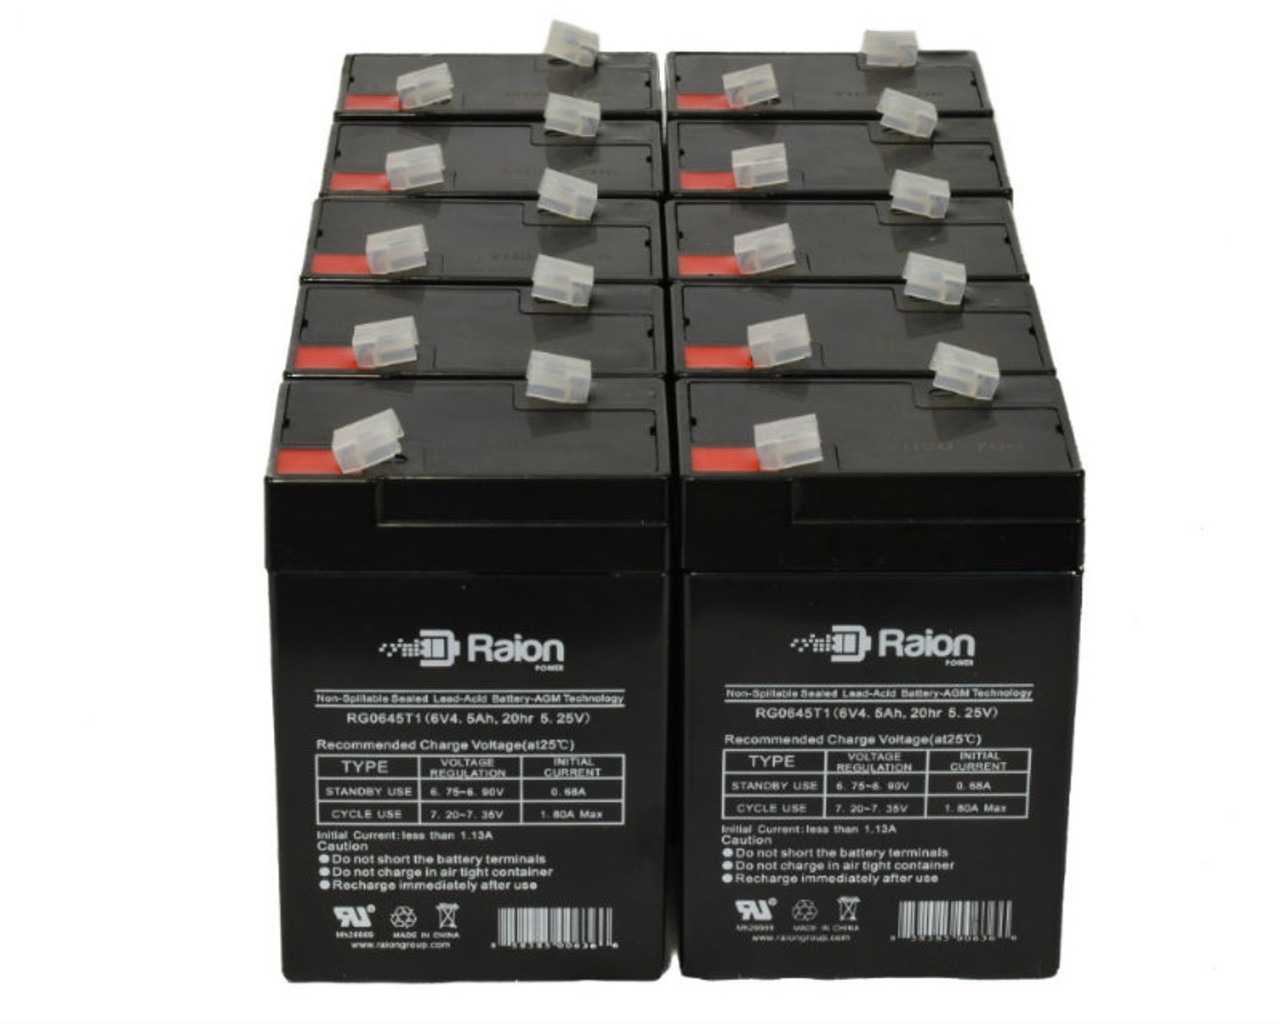 Raion Power 6V 4.5Ah Replacement Emergency Light Battery for Tork 650 - 10 Pack